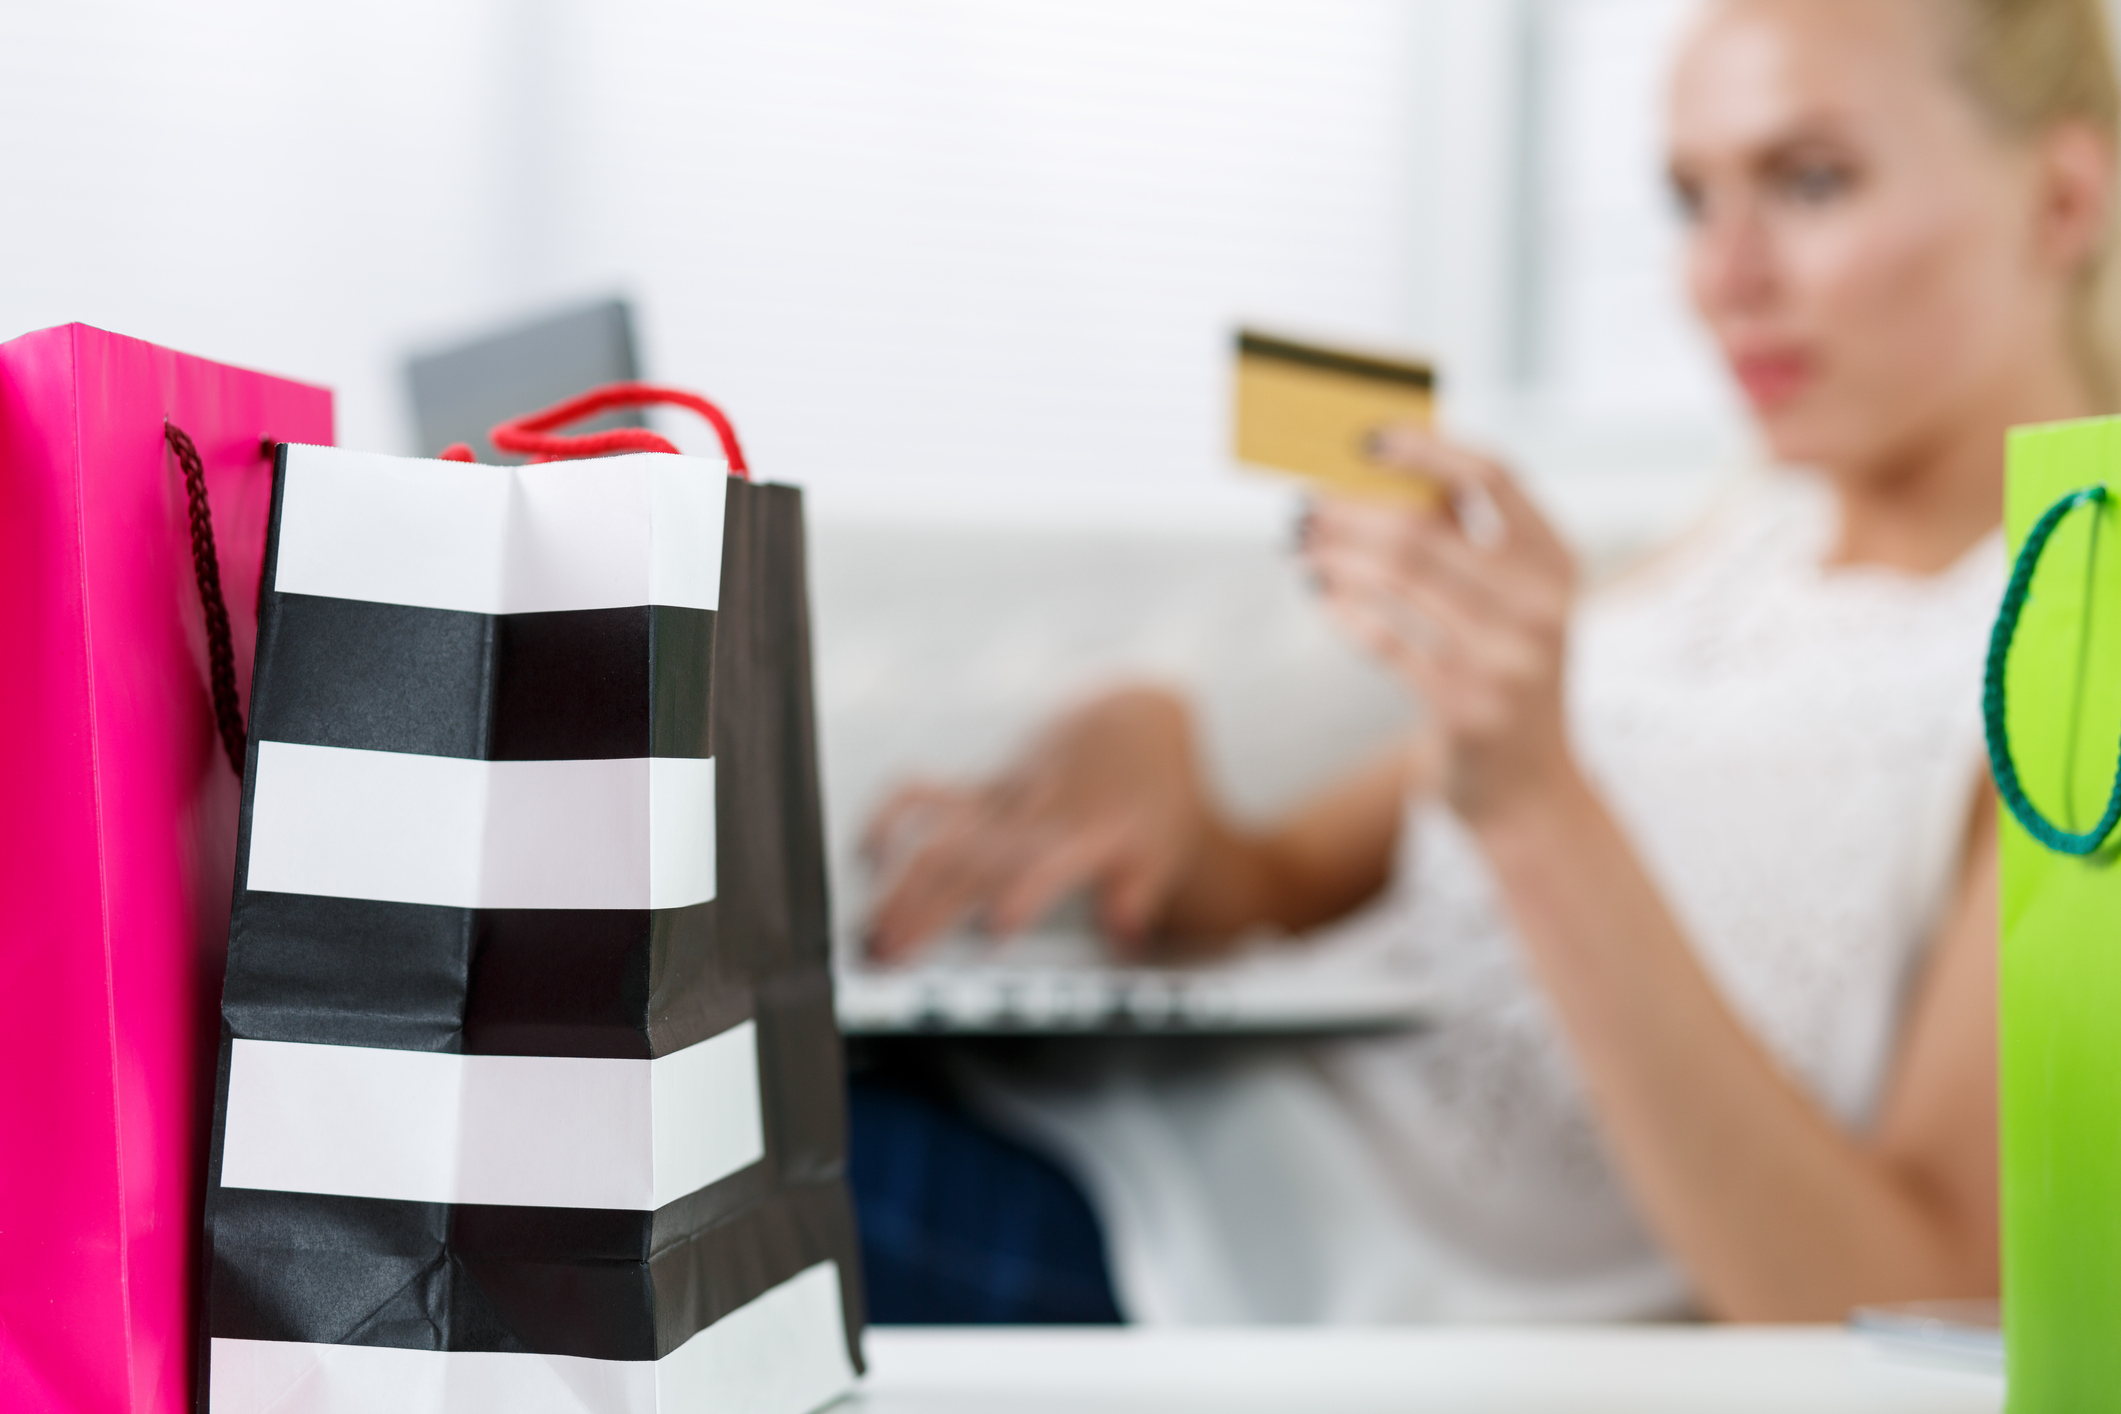 Blond woman making purchasing via internet paying credit card